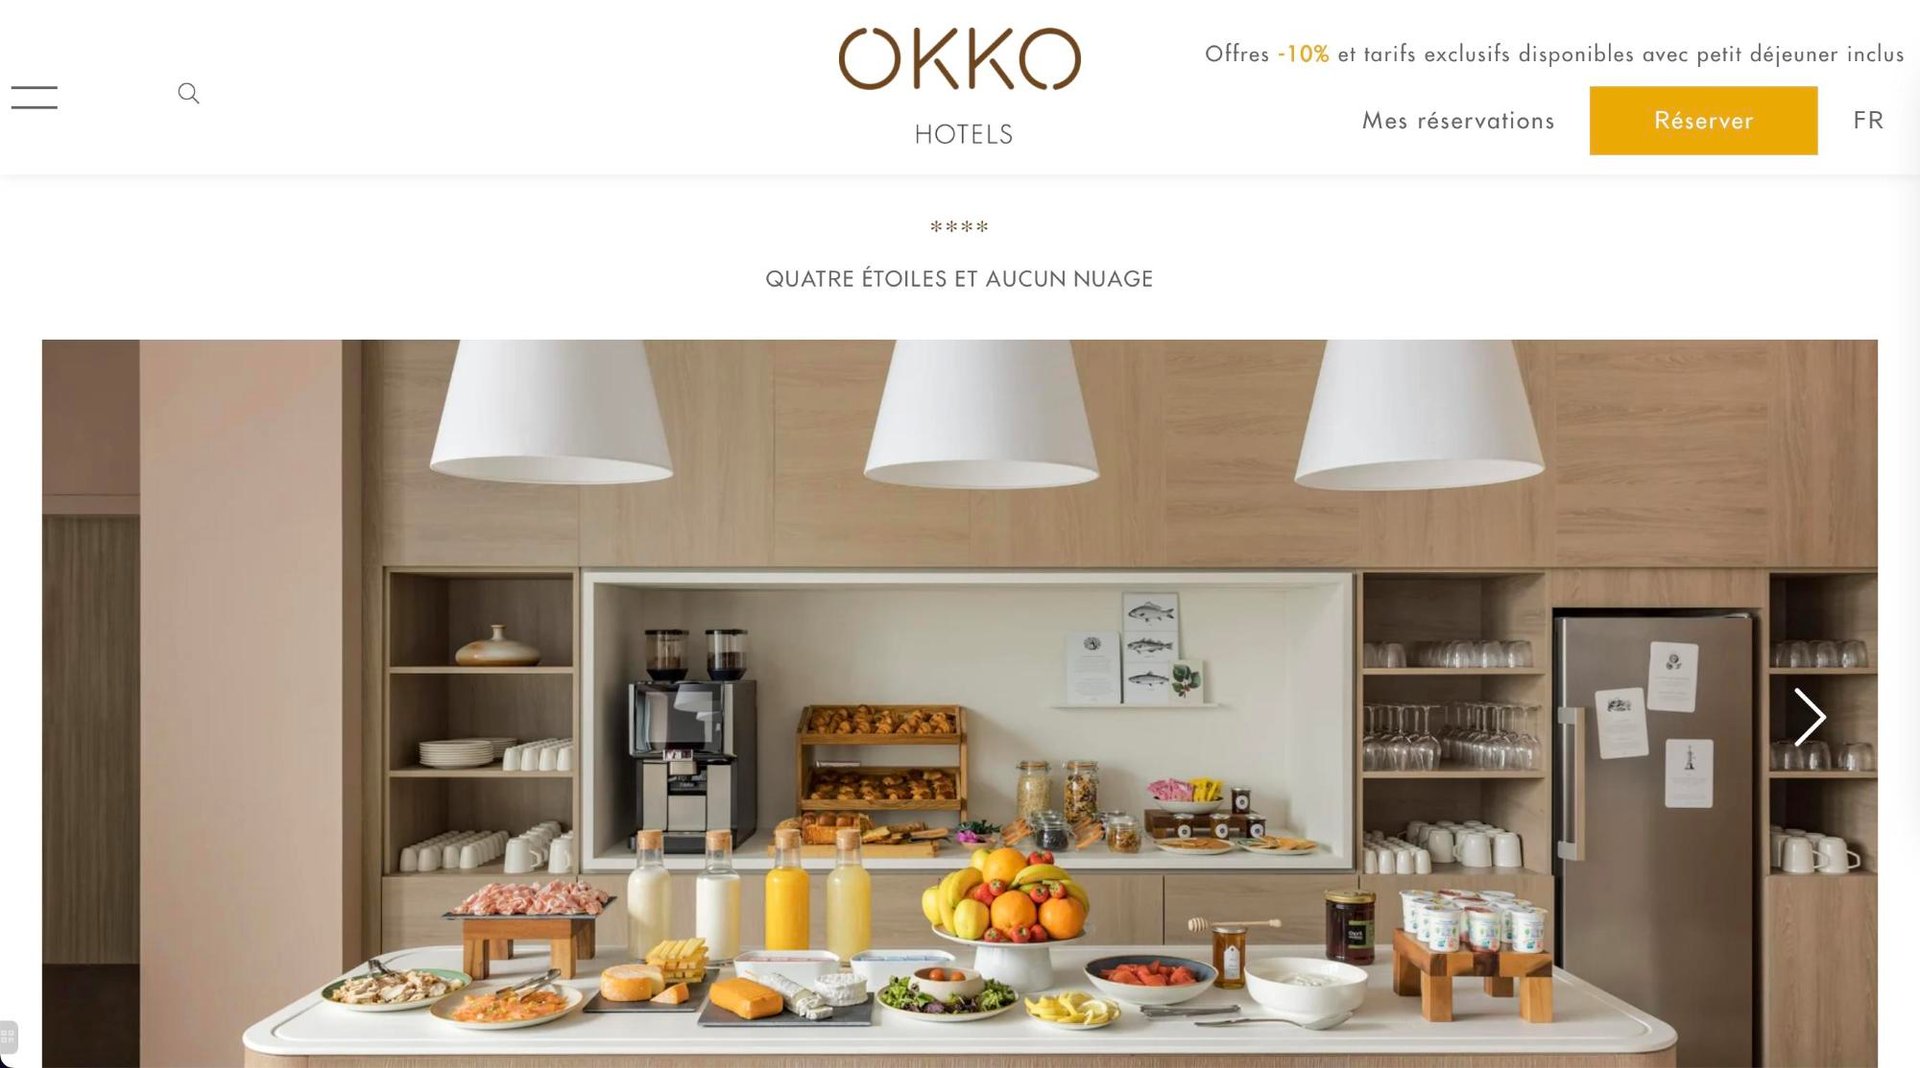 Agence MMCréation | Portfolio Okko Hotels